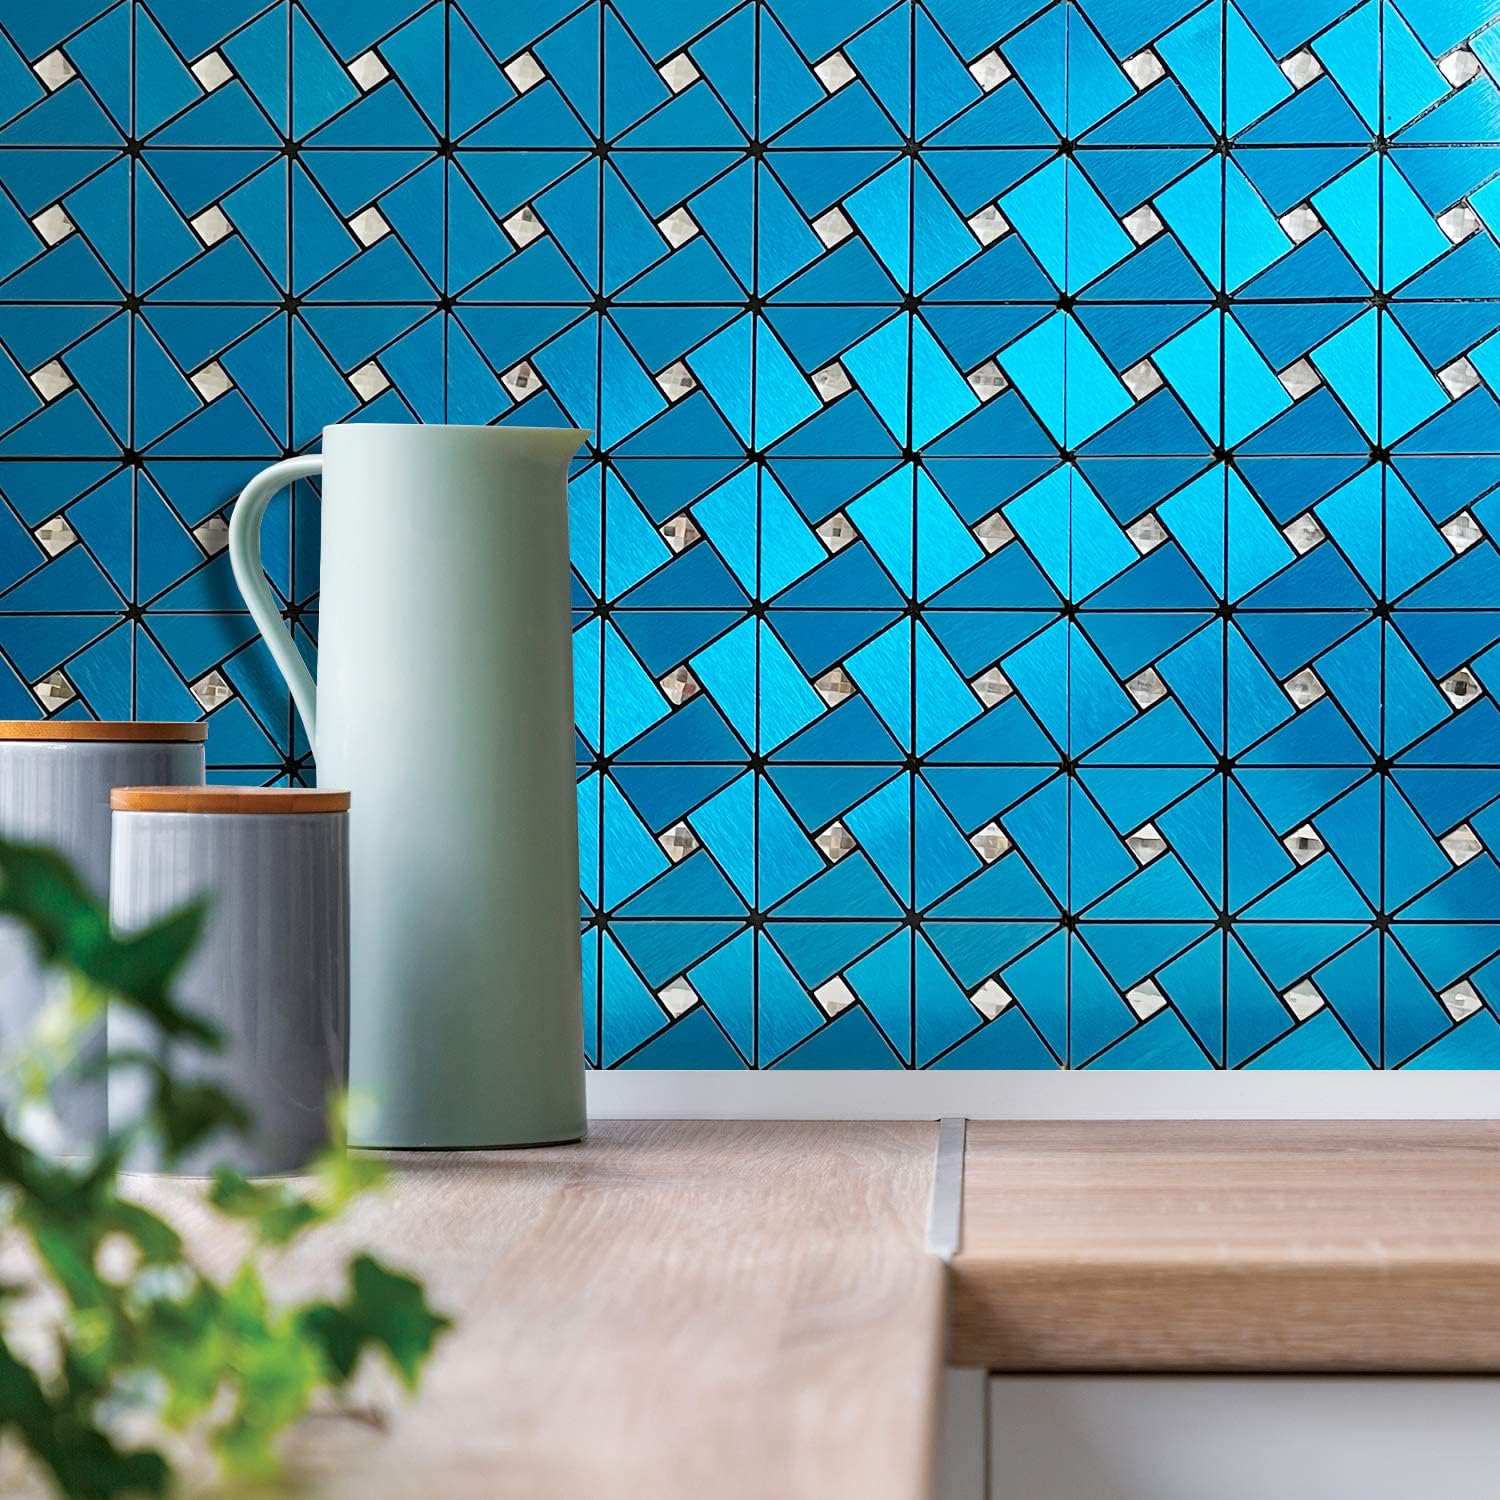 DICOFUN 10-Sheet Peel and Stick Backsplash Metal Tile, Mixed Glass Self-Adhesive Mosaic Tiles, Stainless Steel Stick on Wall Tiles for